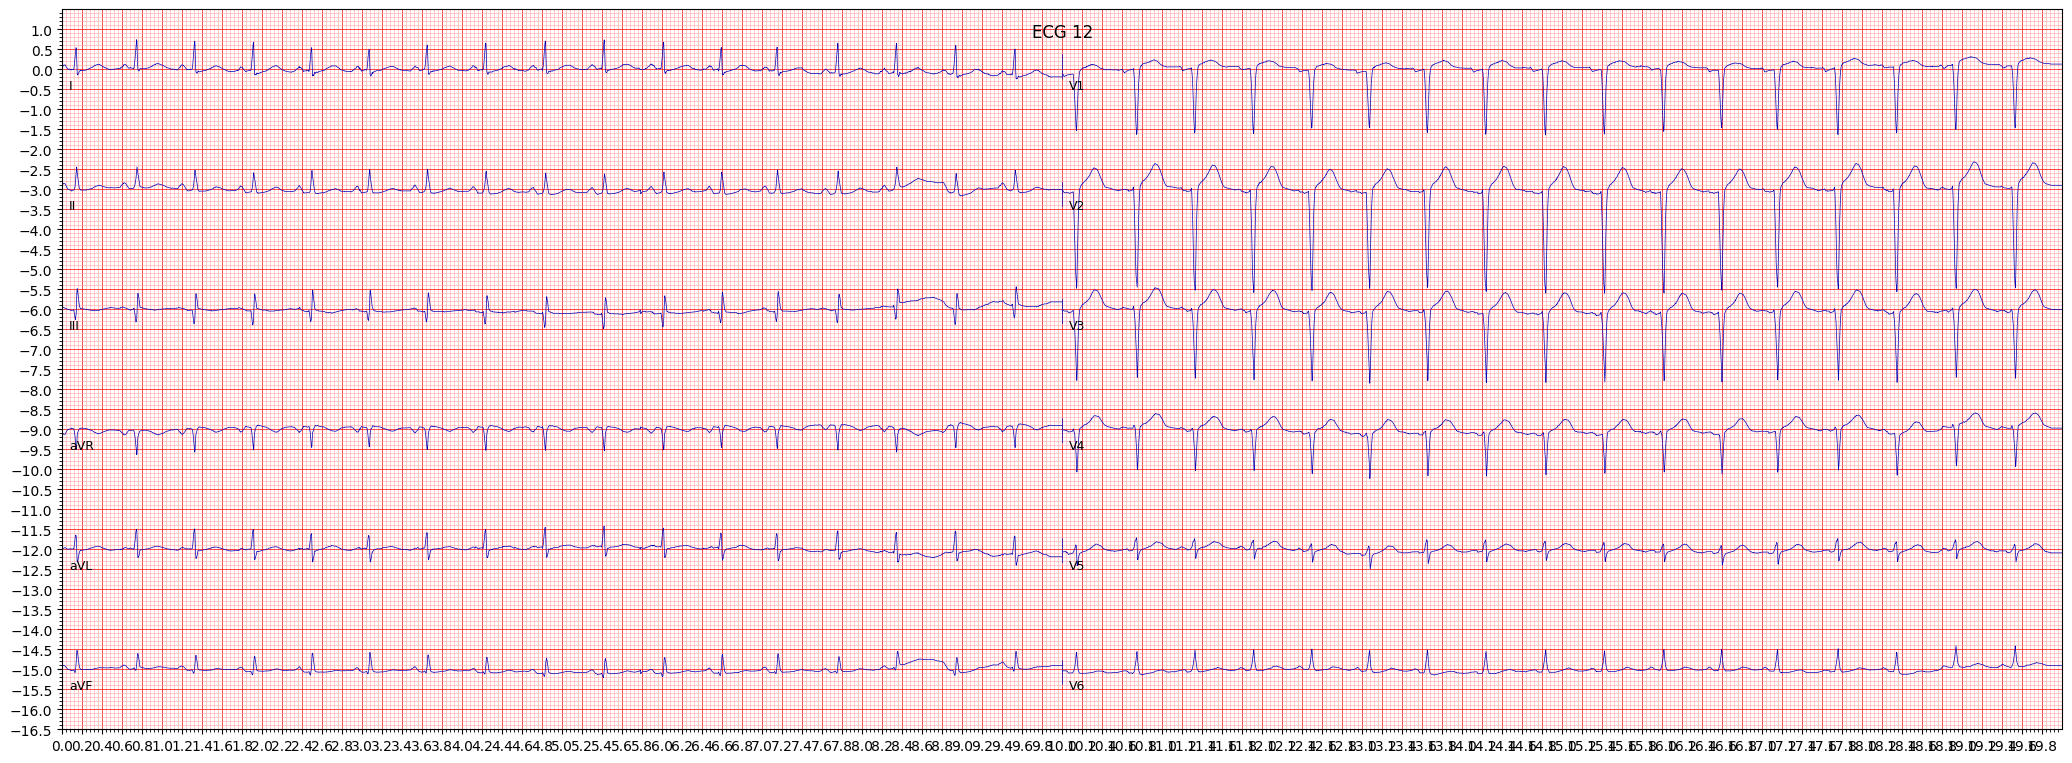 anteroseptal myocardial infarction (ASMI) example 1278